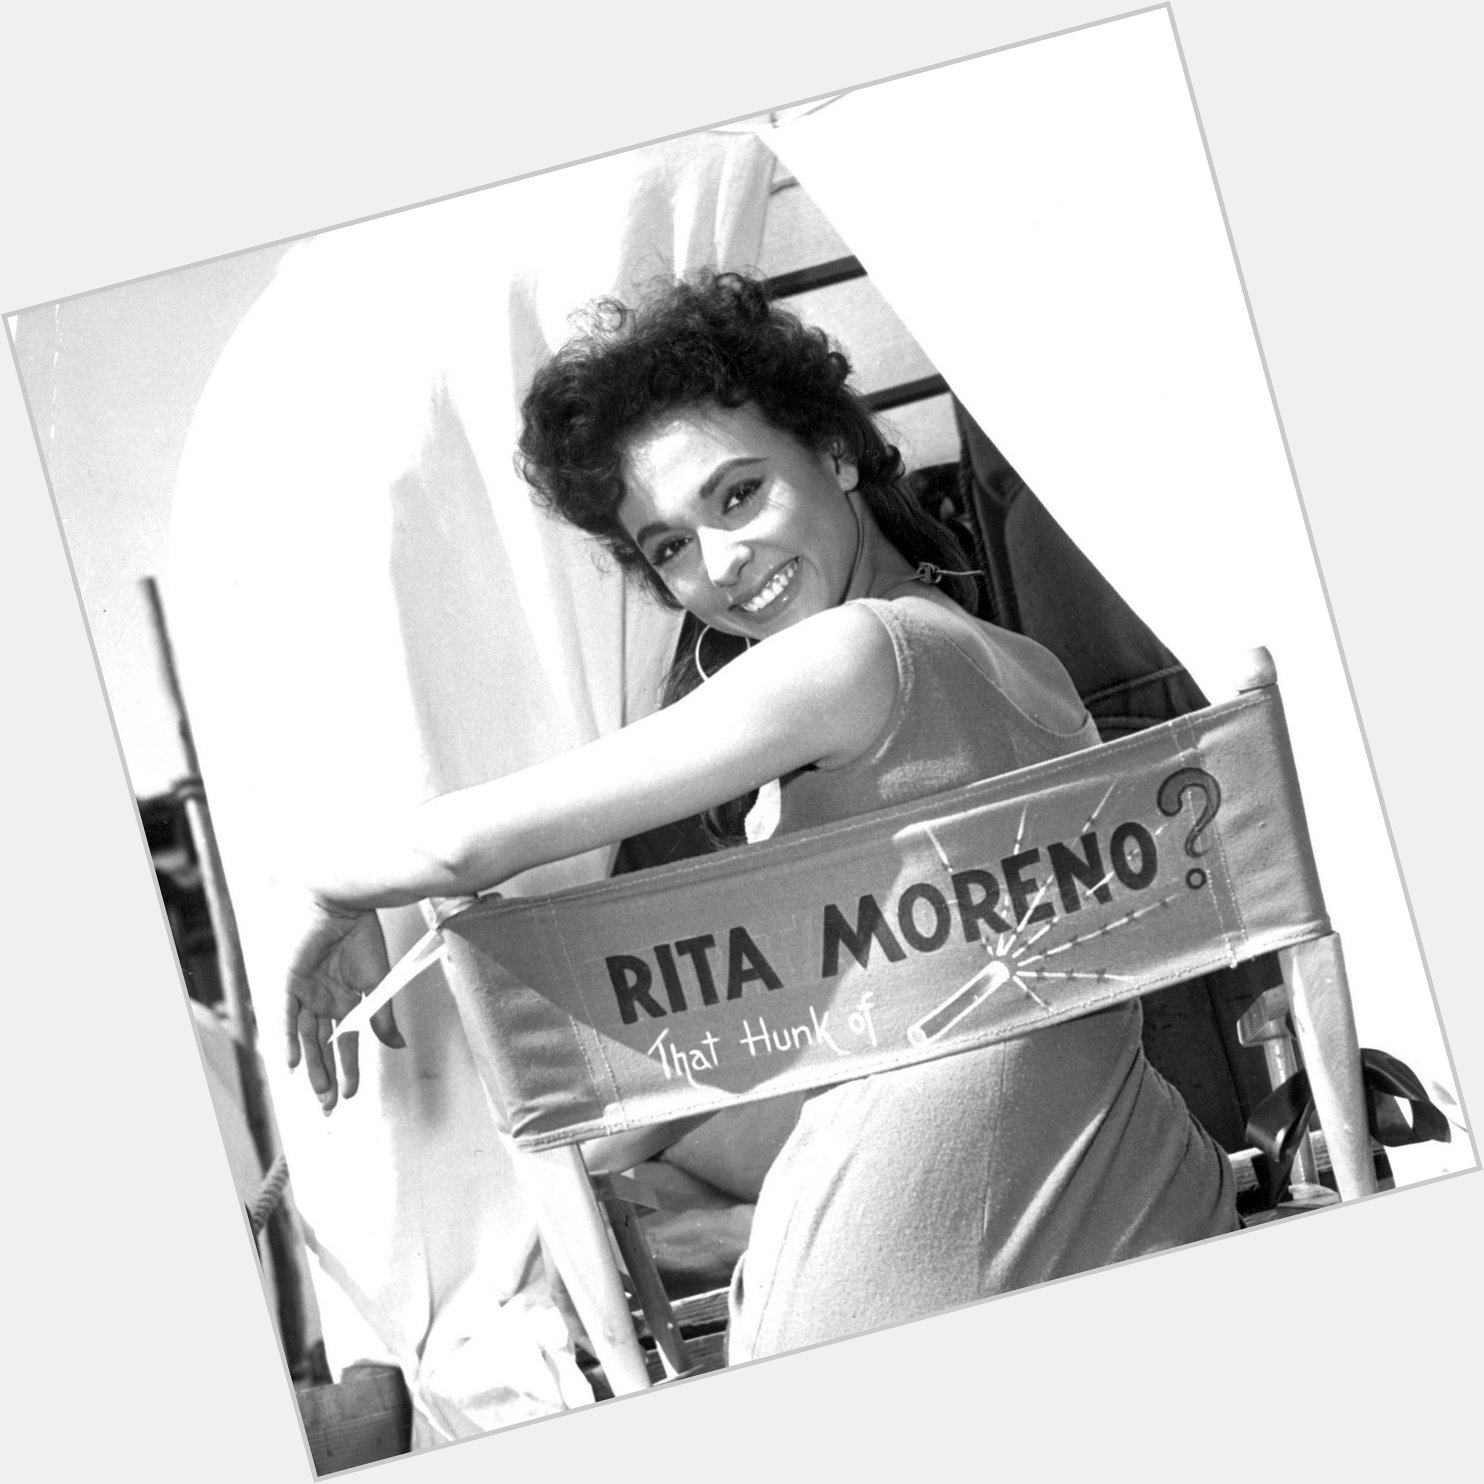 Happy birthday to Rita Moreno! 